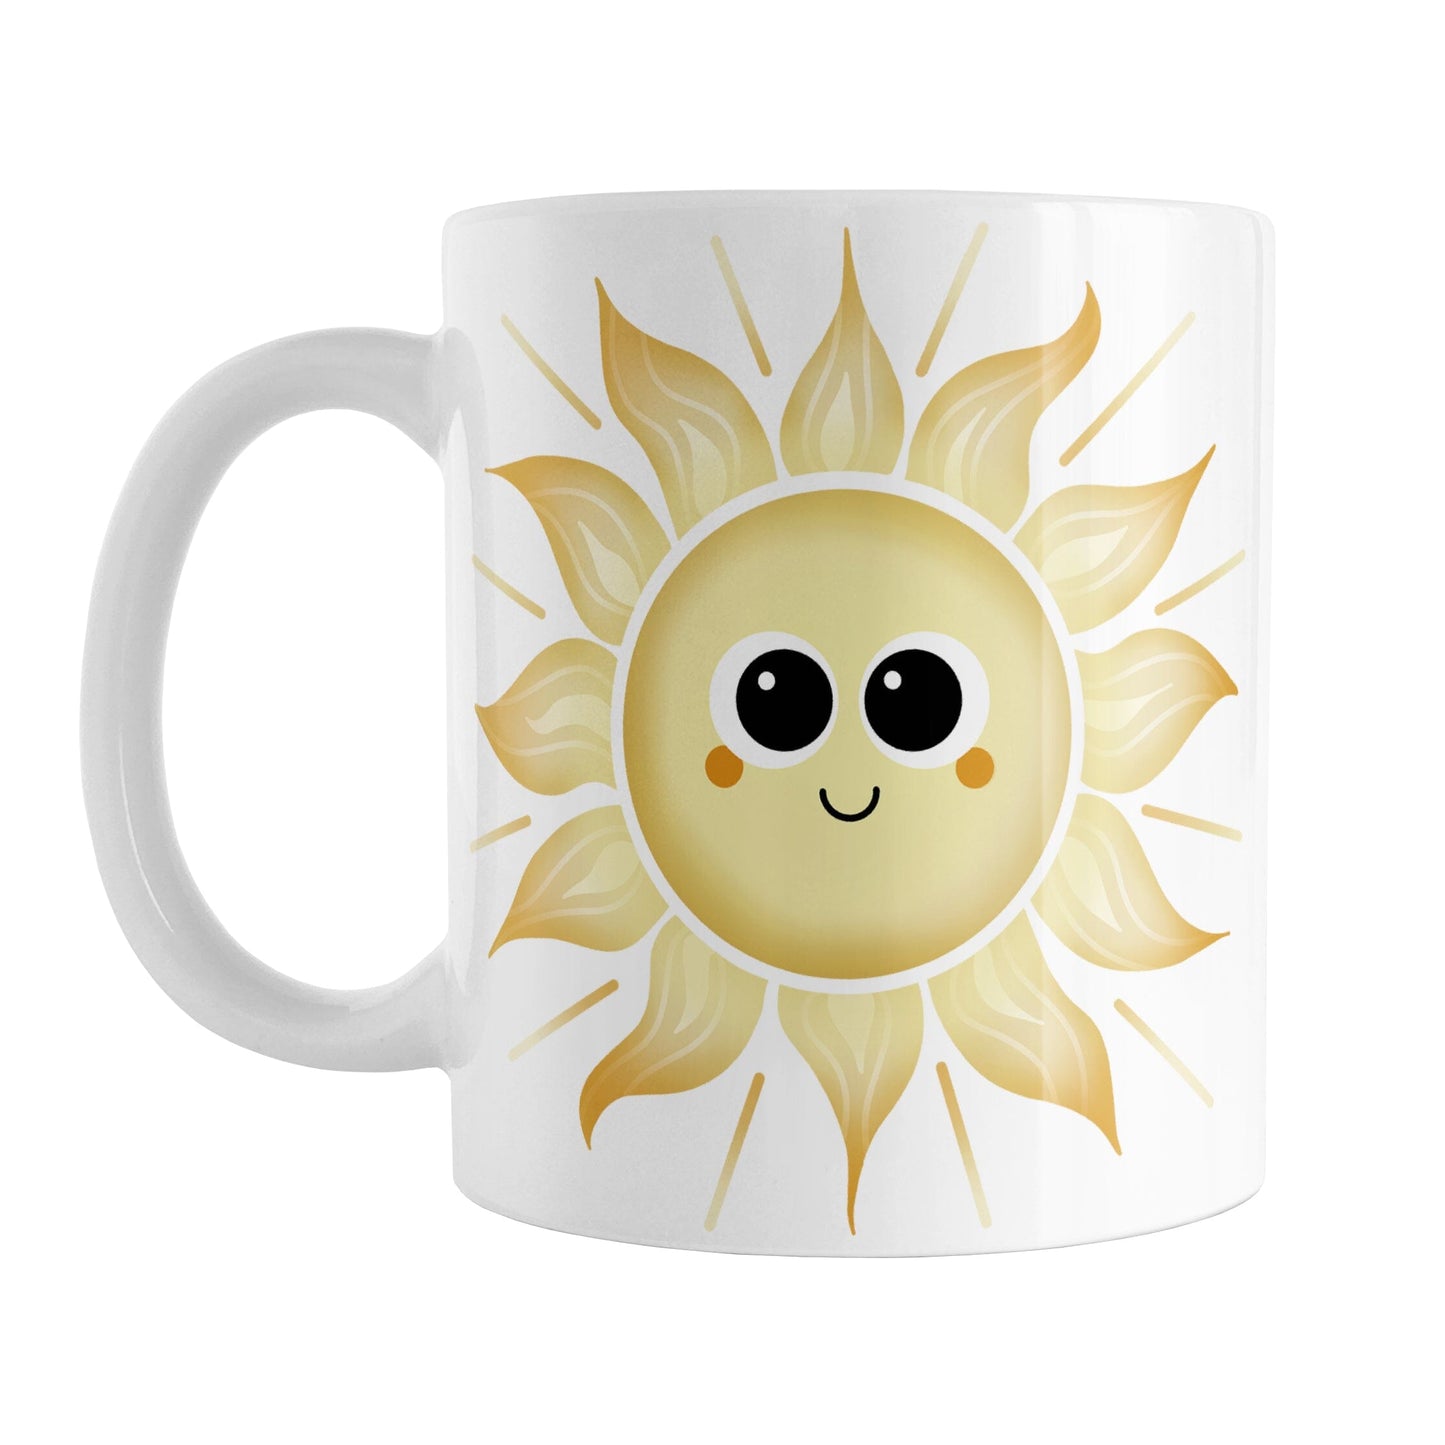 Happy Sun Mug (11oz) at Amy's Coffee Mugs. A ceramic coffee mug designed with a cute and happy yellow smiling sun on both sides of the mug. 